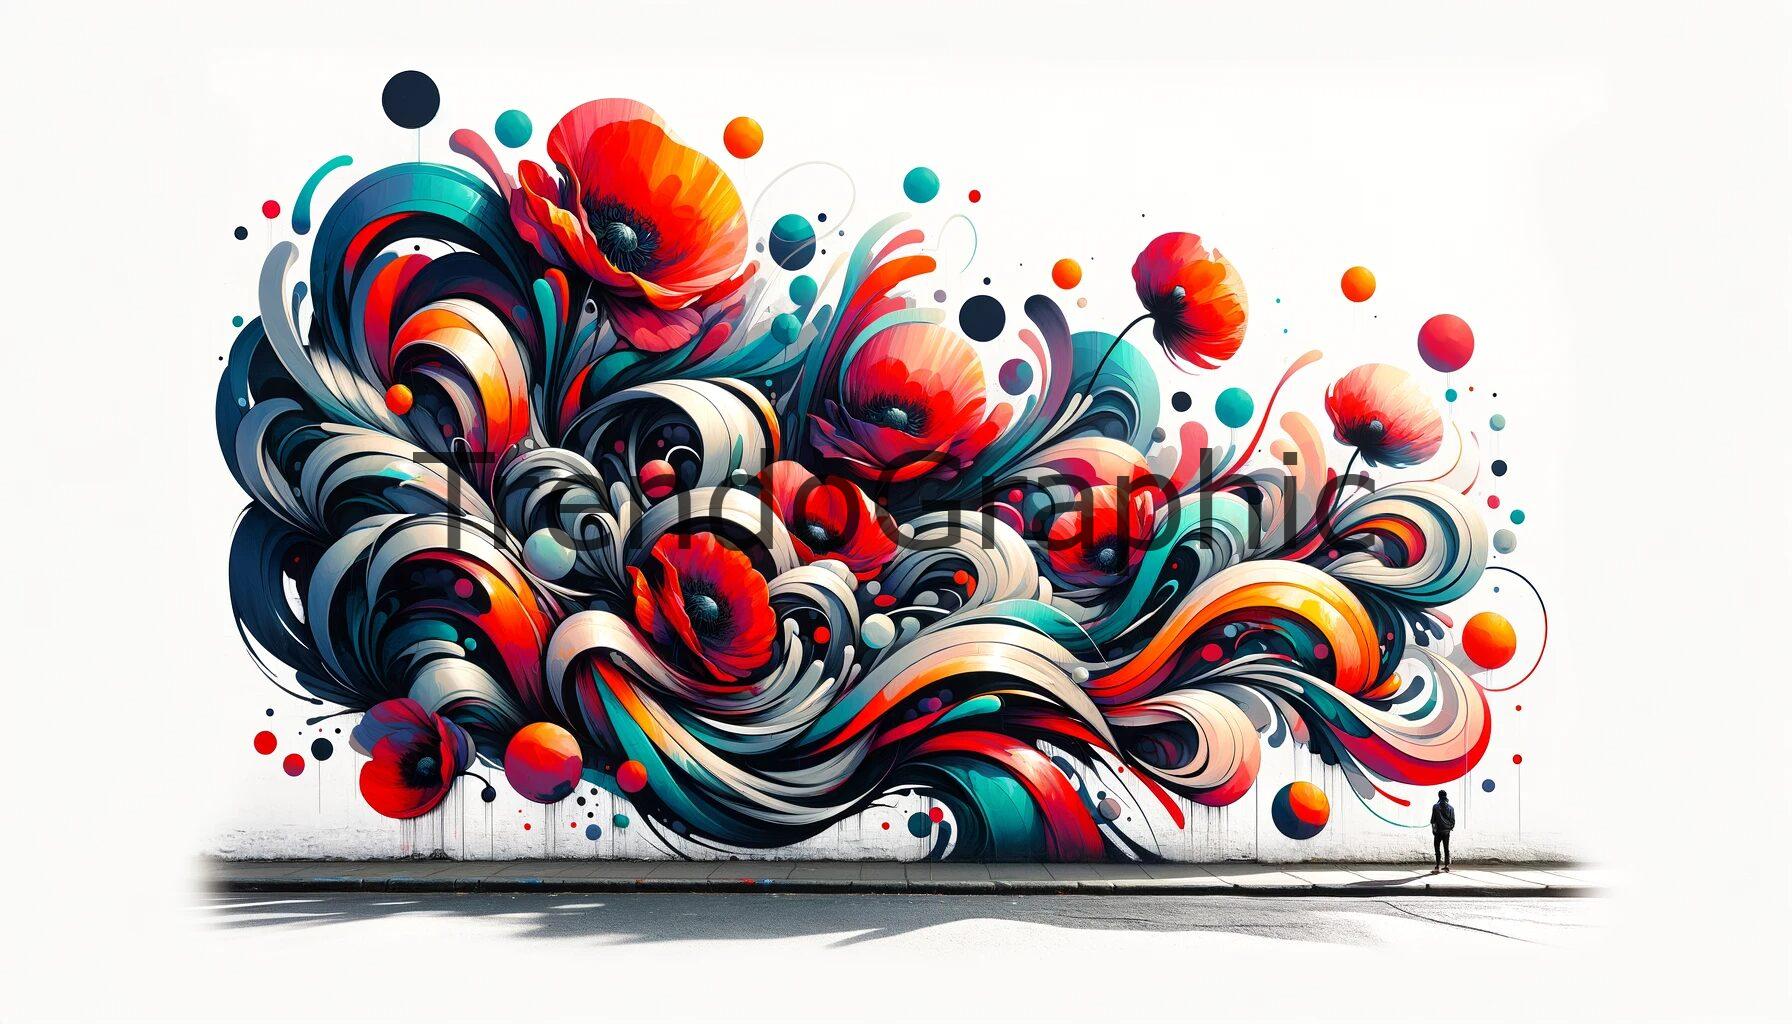 Vivid Poppies in Abstract Swirls: A Graffiti Art Masterpiece